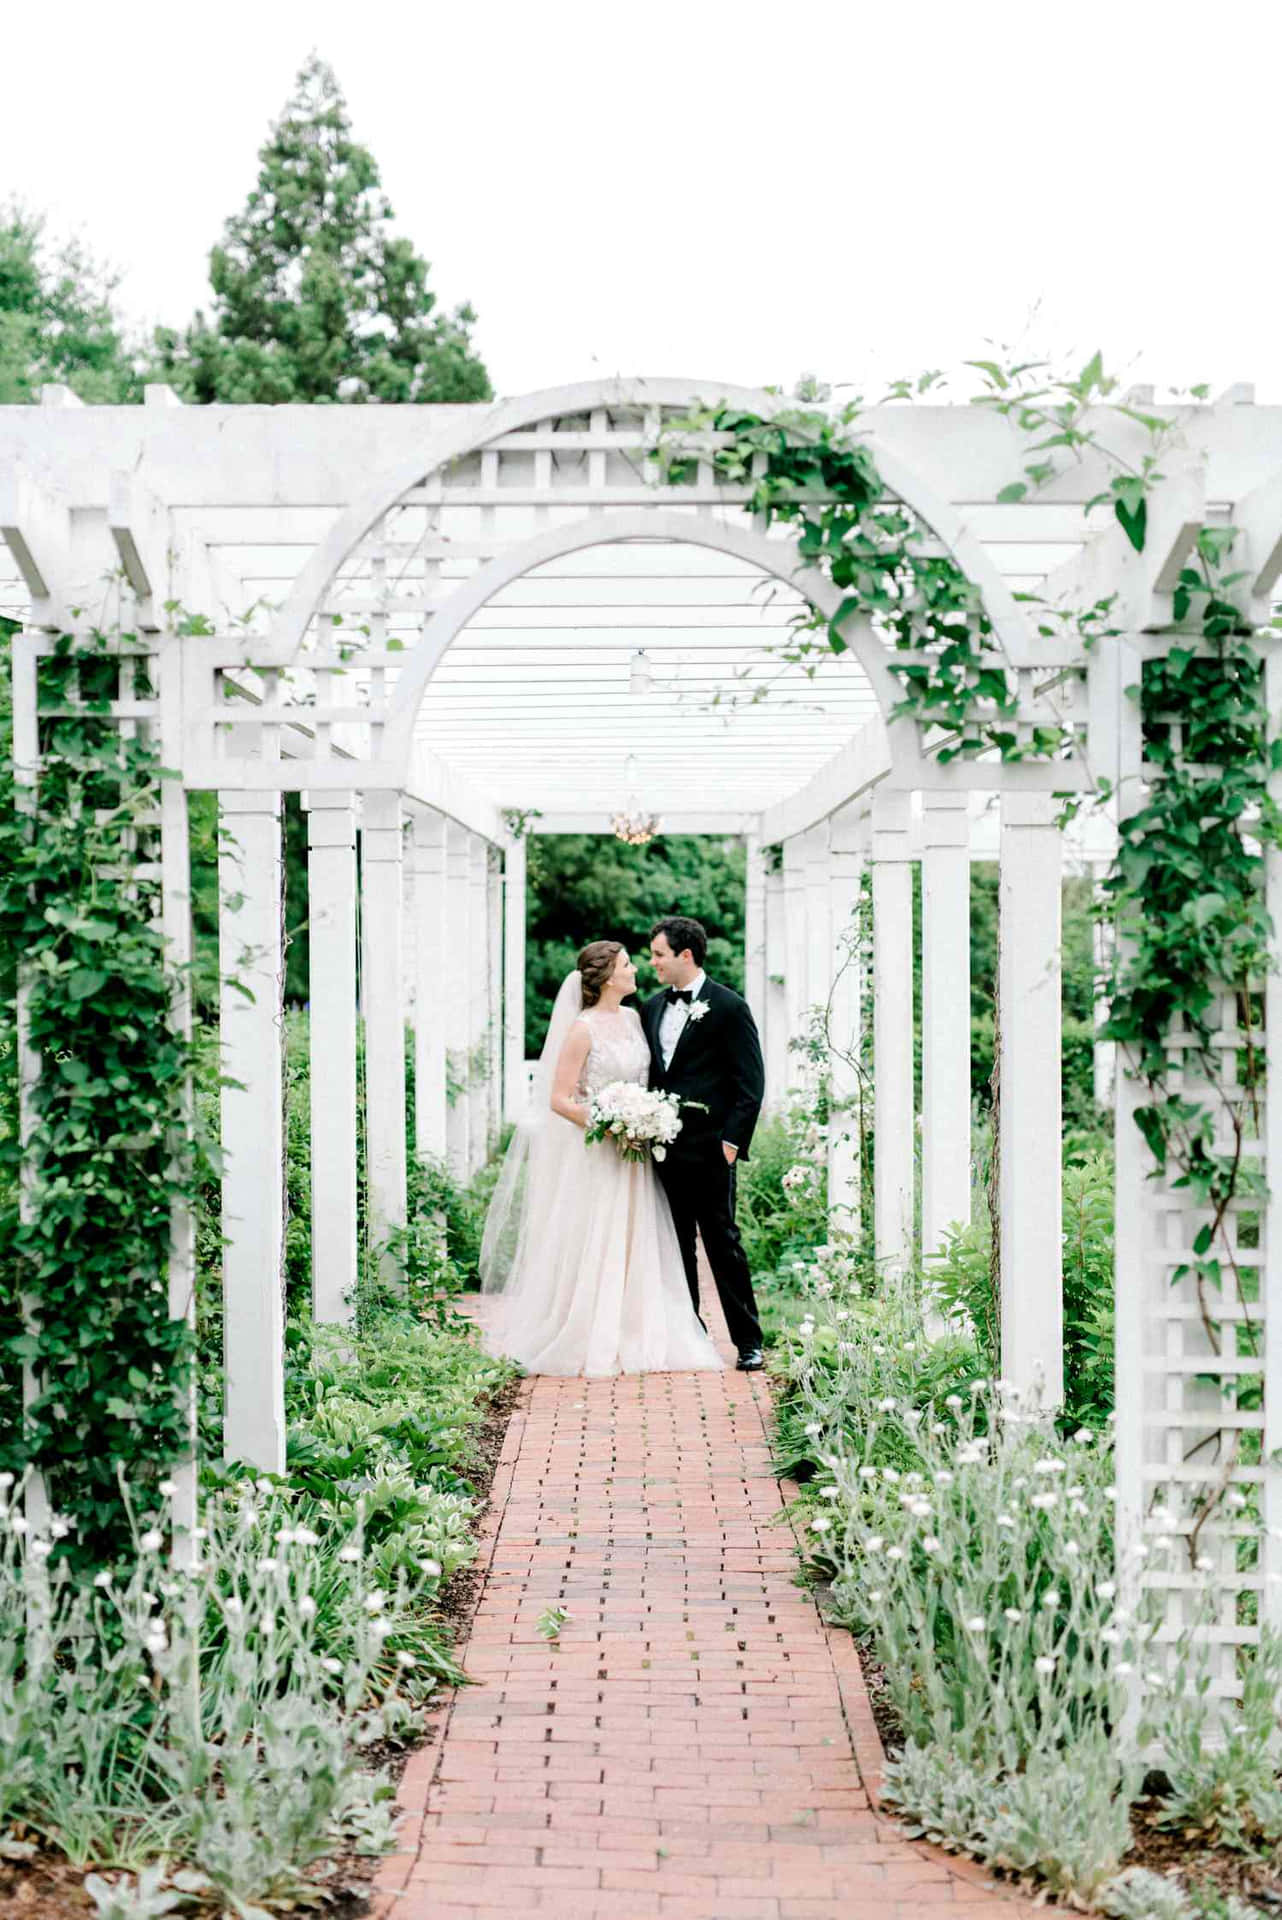 Elegant Garden Wedding Ceremony Setup Wallpaper